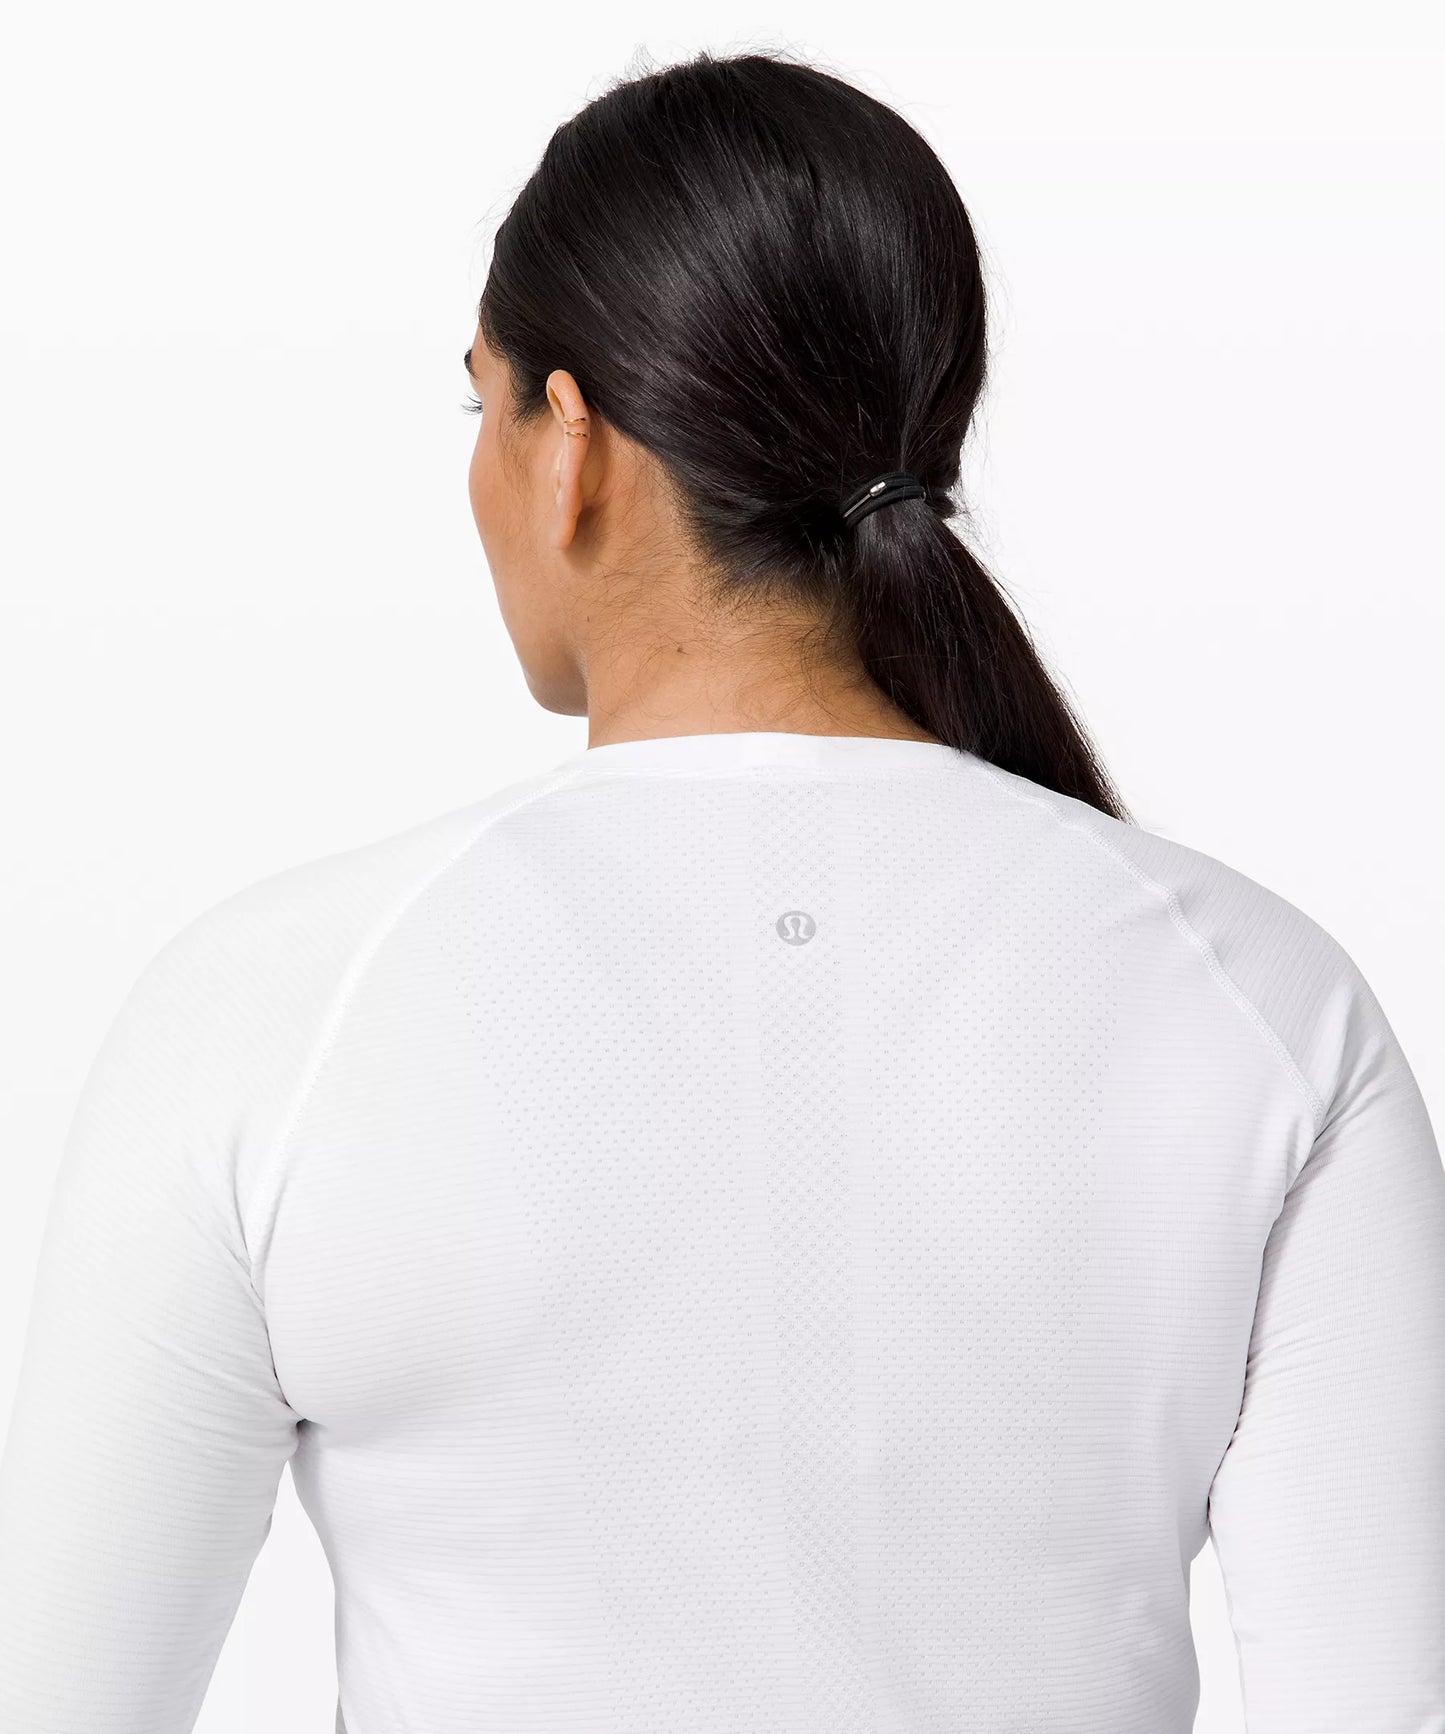 Lululemon Swiftly Tech Long Sleeve Shirt 2.0 Race Length